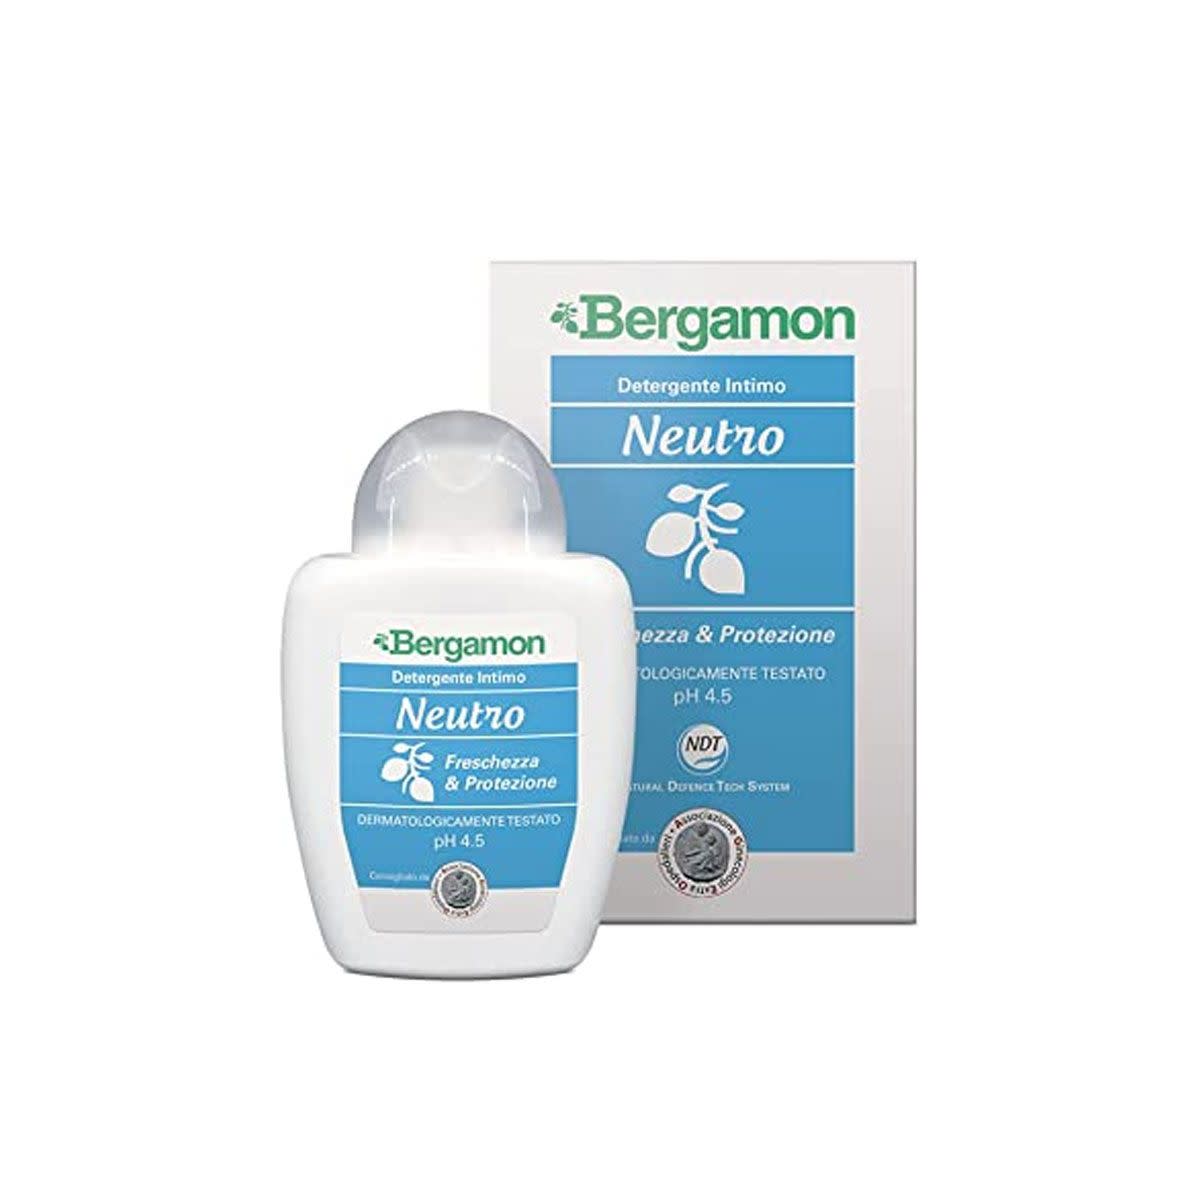 975521004 - Bergamon Detergente Intimo Neutro 200ml - 4732515_1.jpg